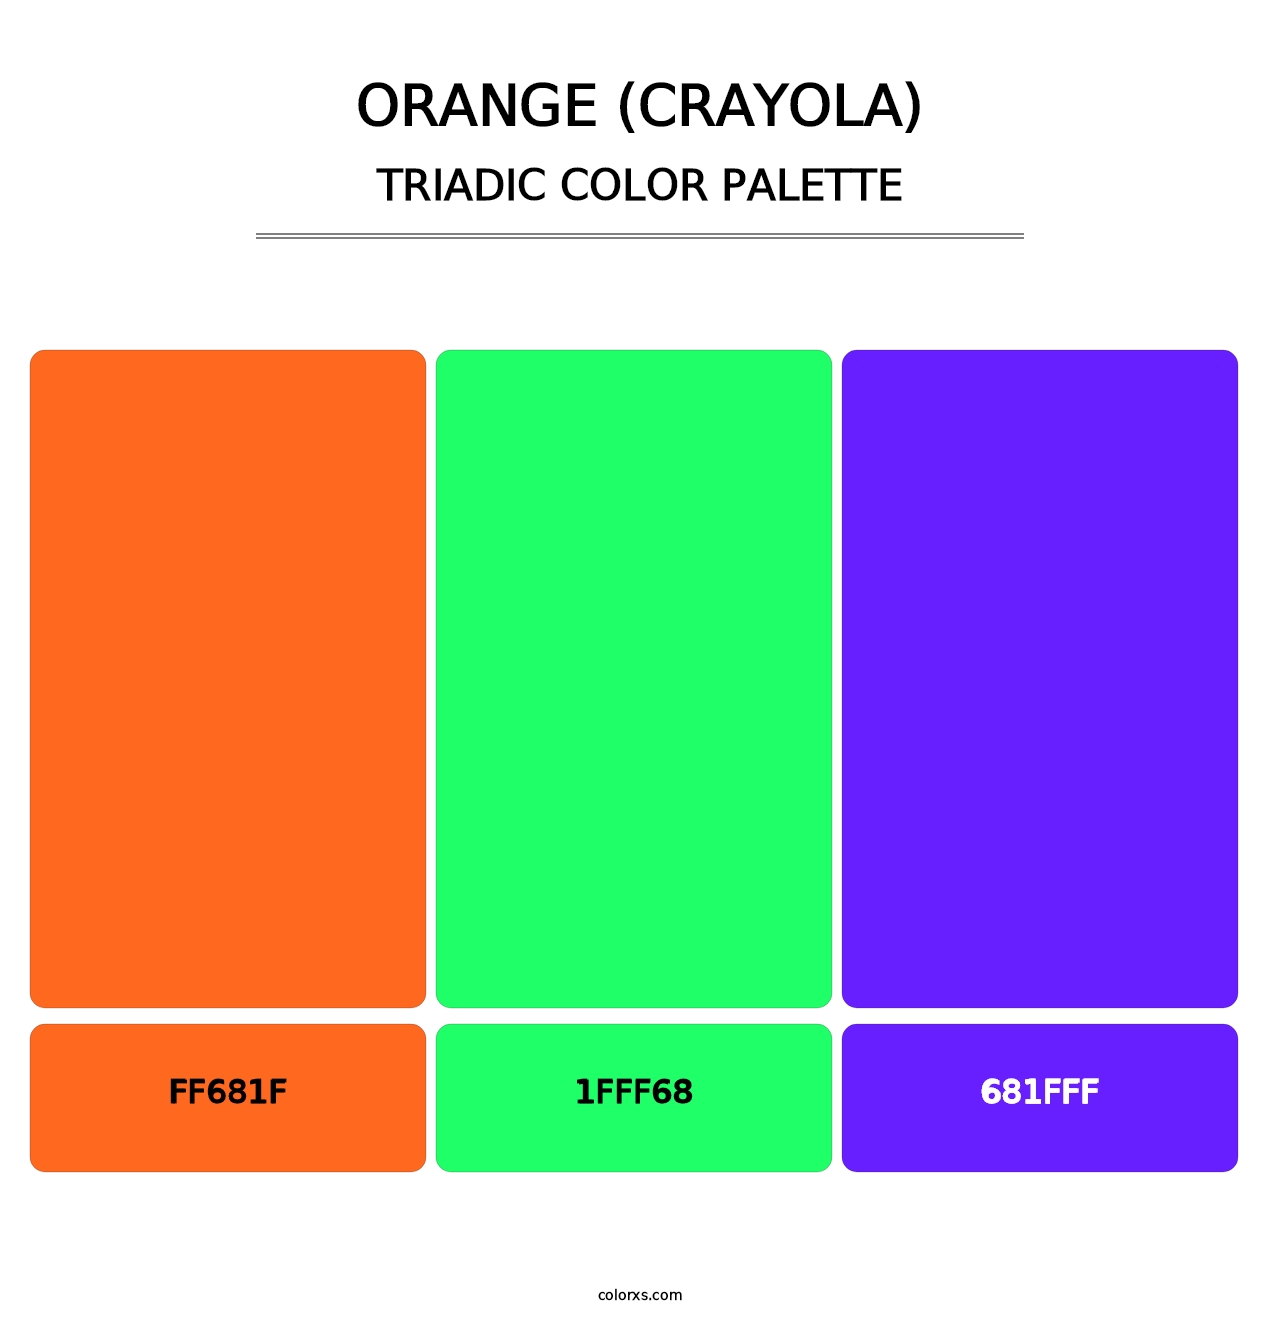 Orange (Crayola) - Triadic Color Palette